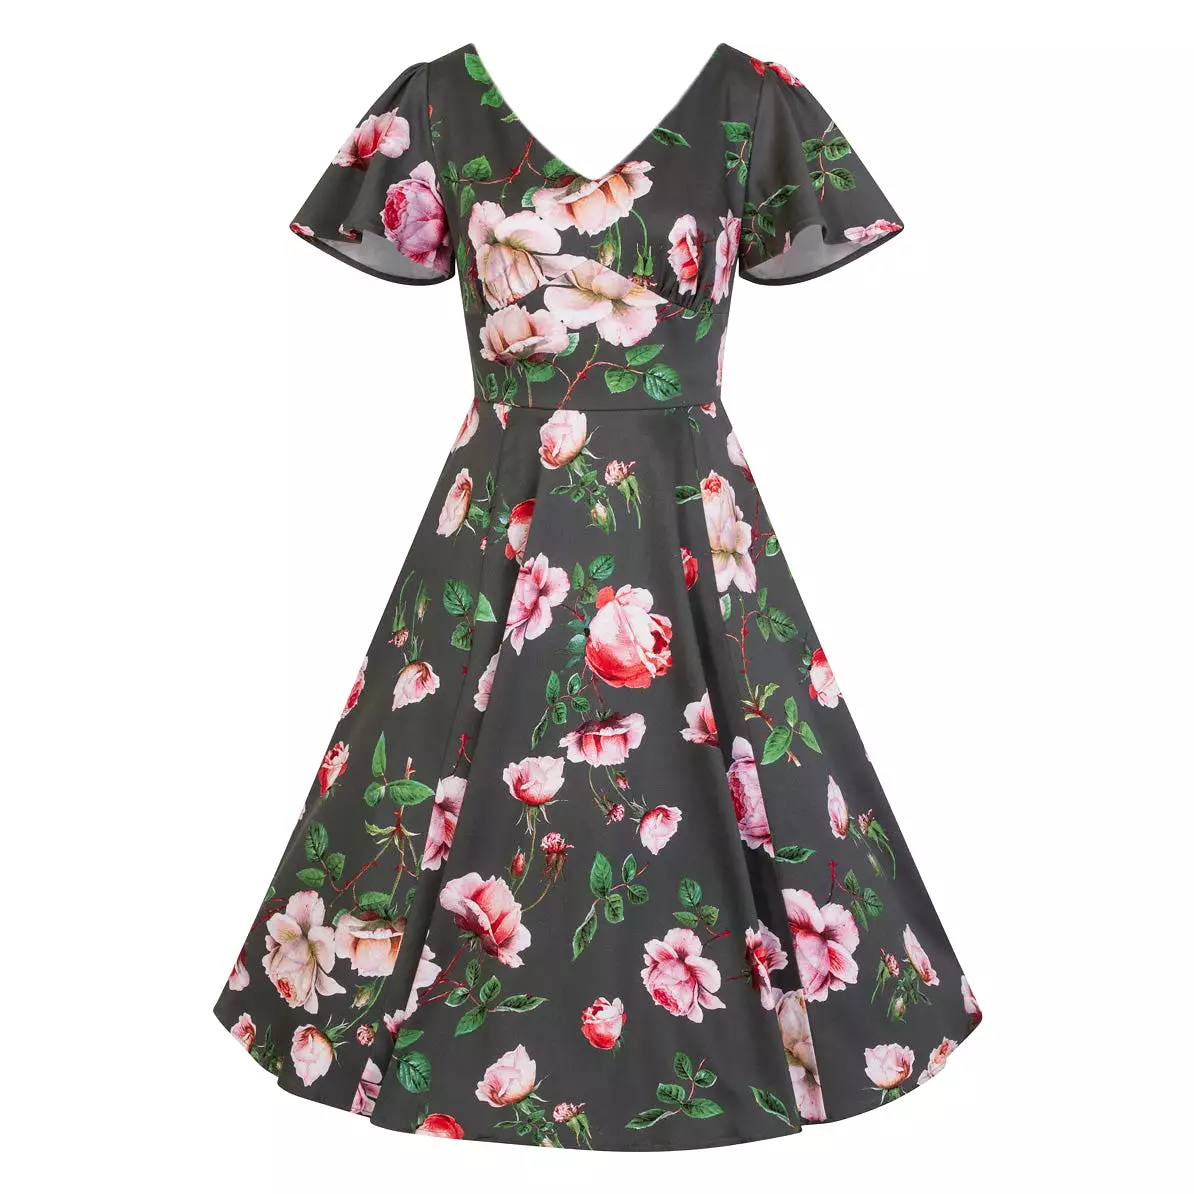 Sage Green Floral Print Cap Sleeve Rockabilly 50s Swing Tea Dress